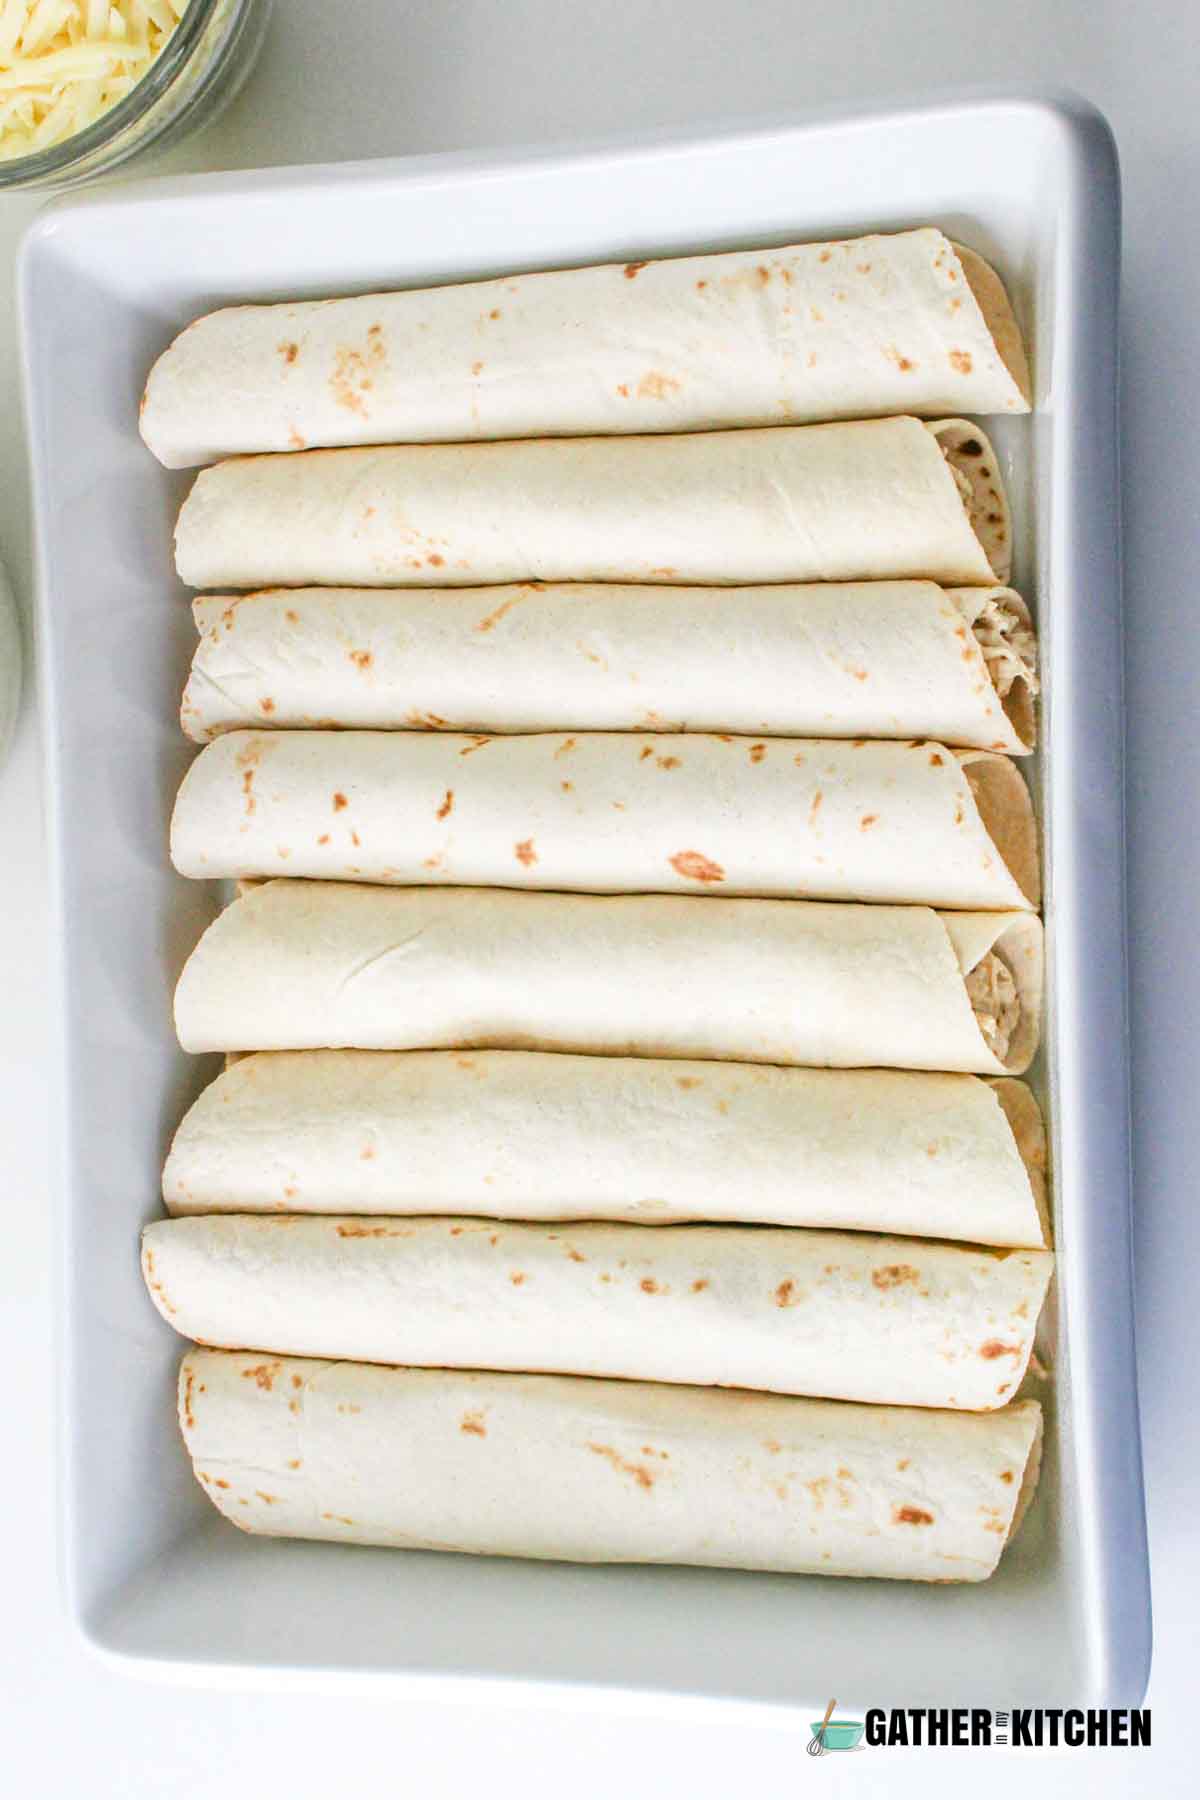 A tray of rolled enchiladas.